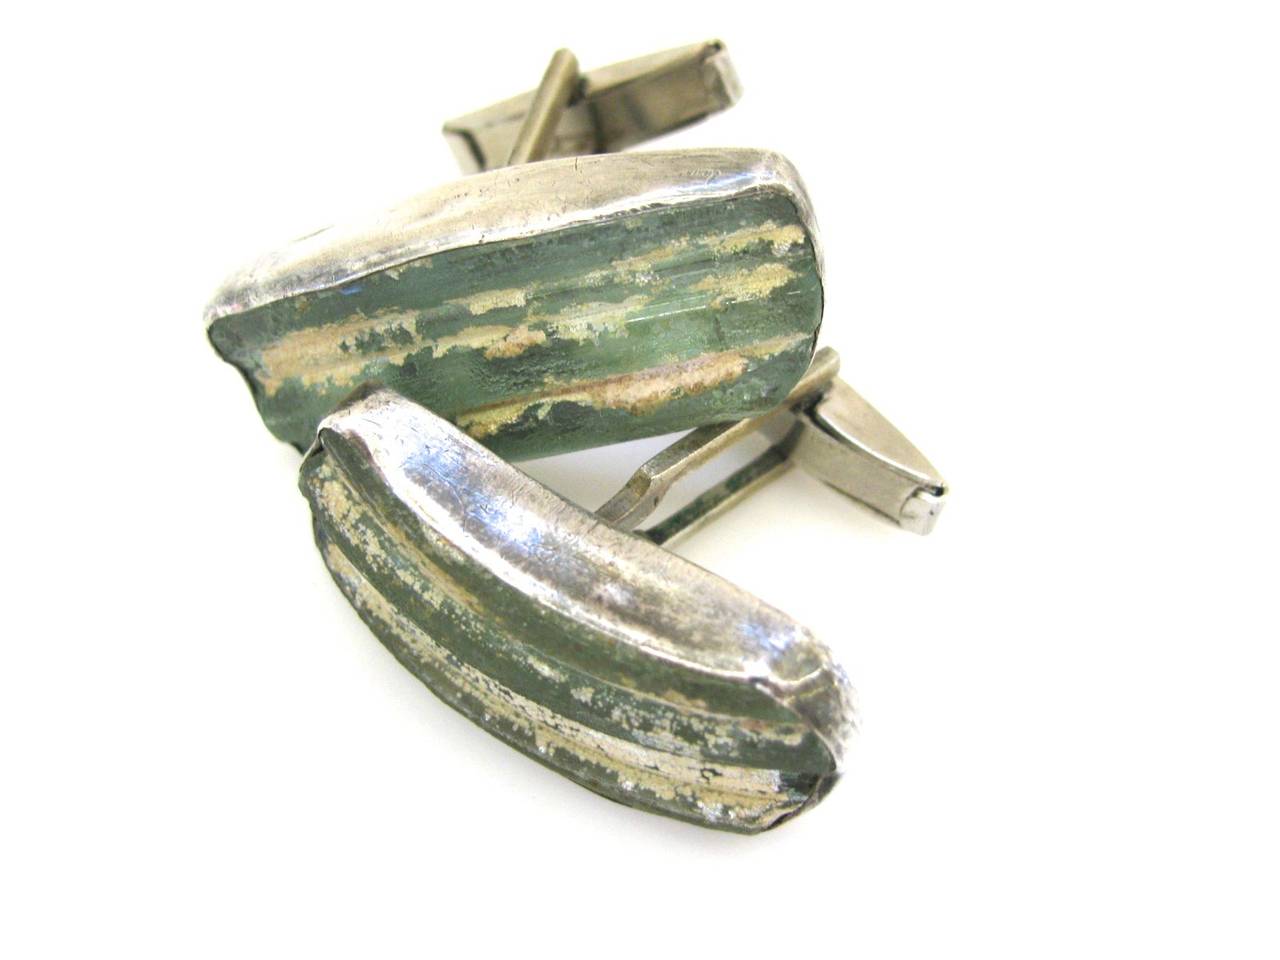 An interesting pair of Roman Glass cuff links. The 1